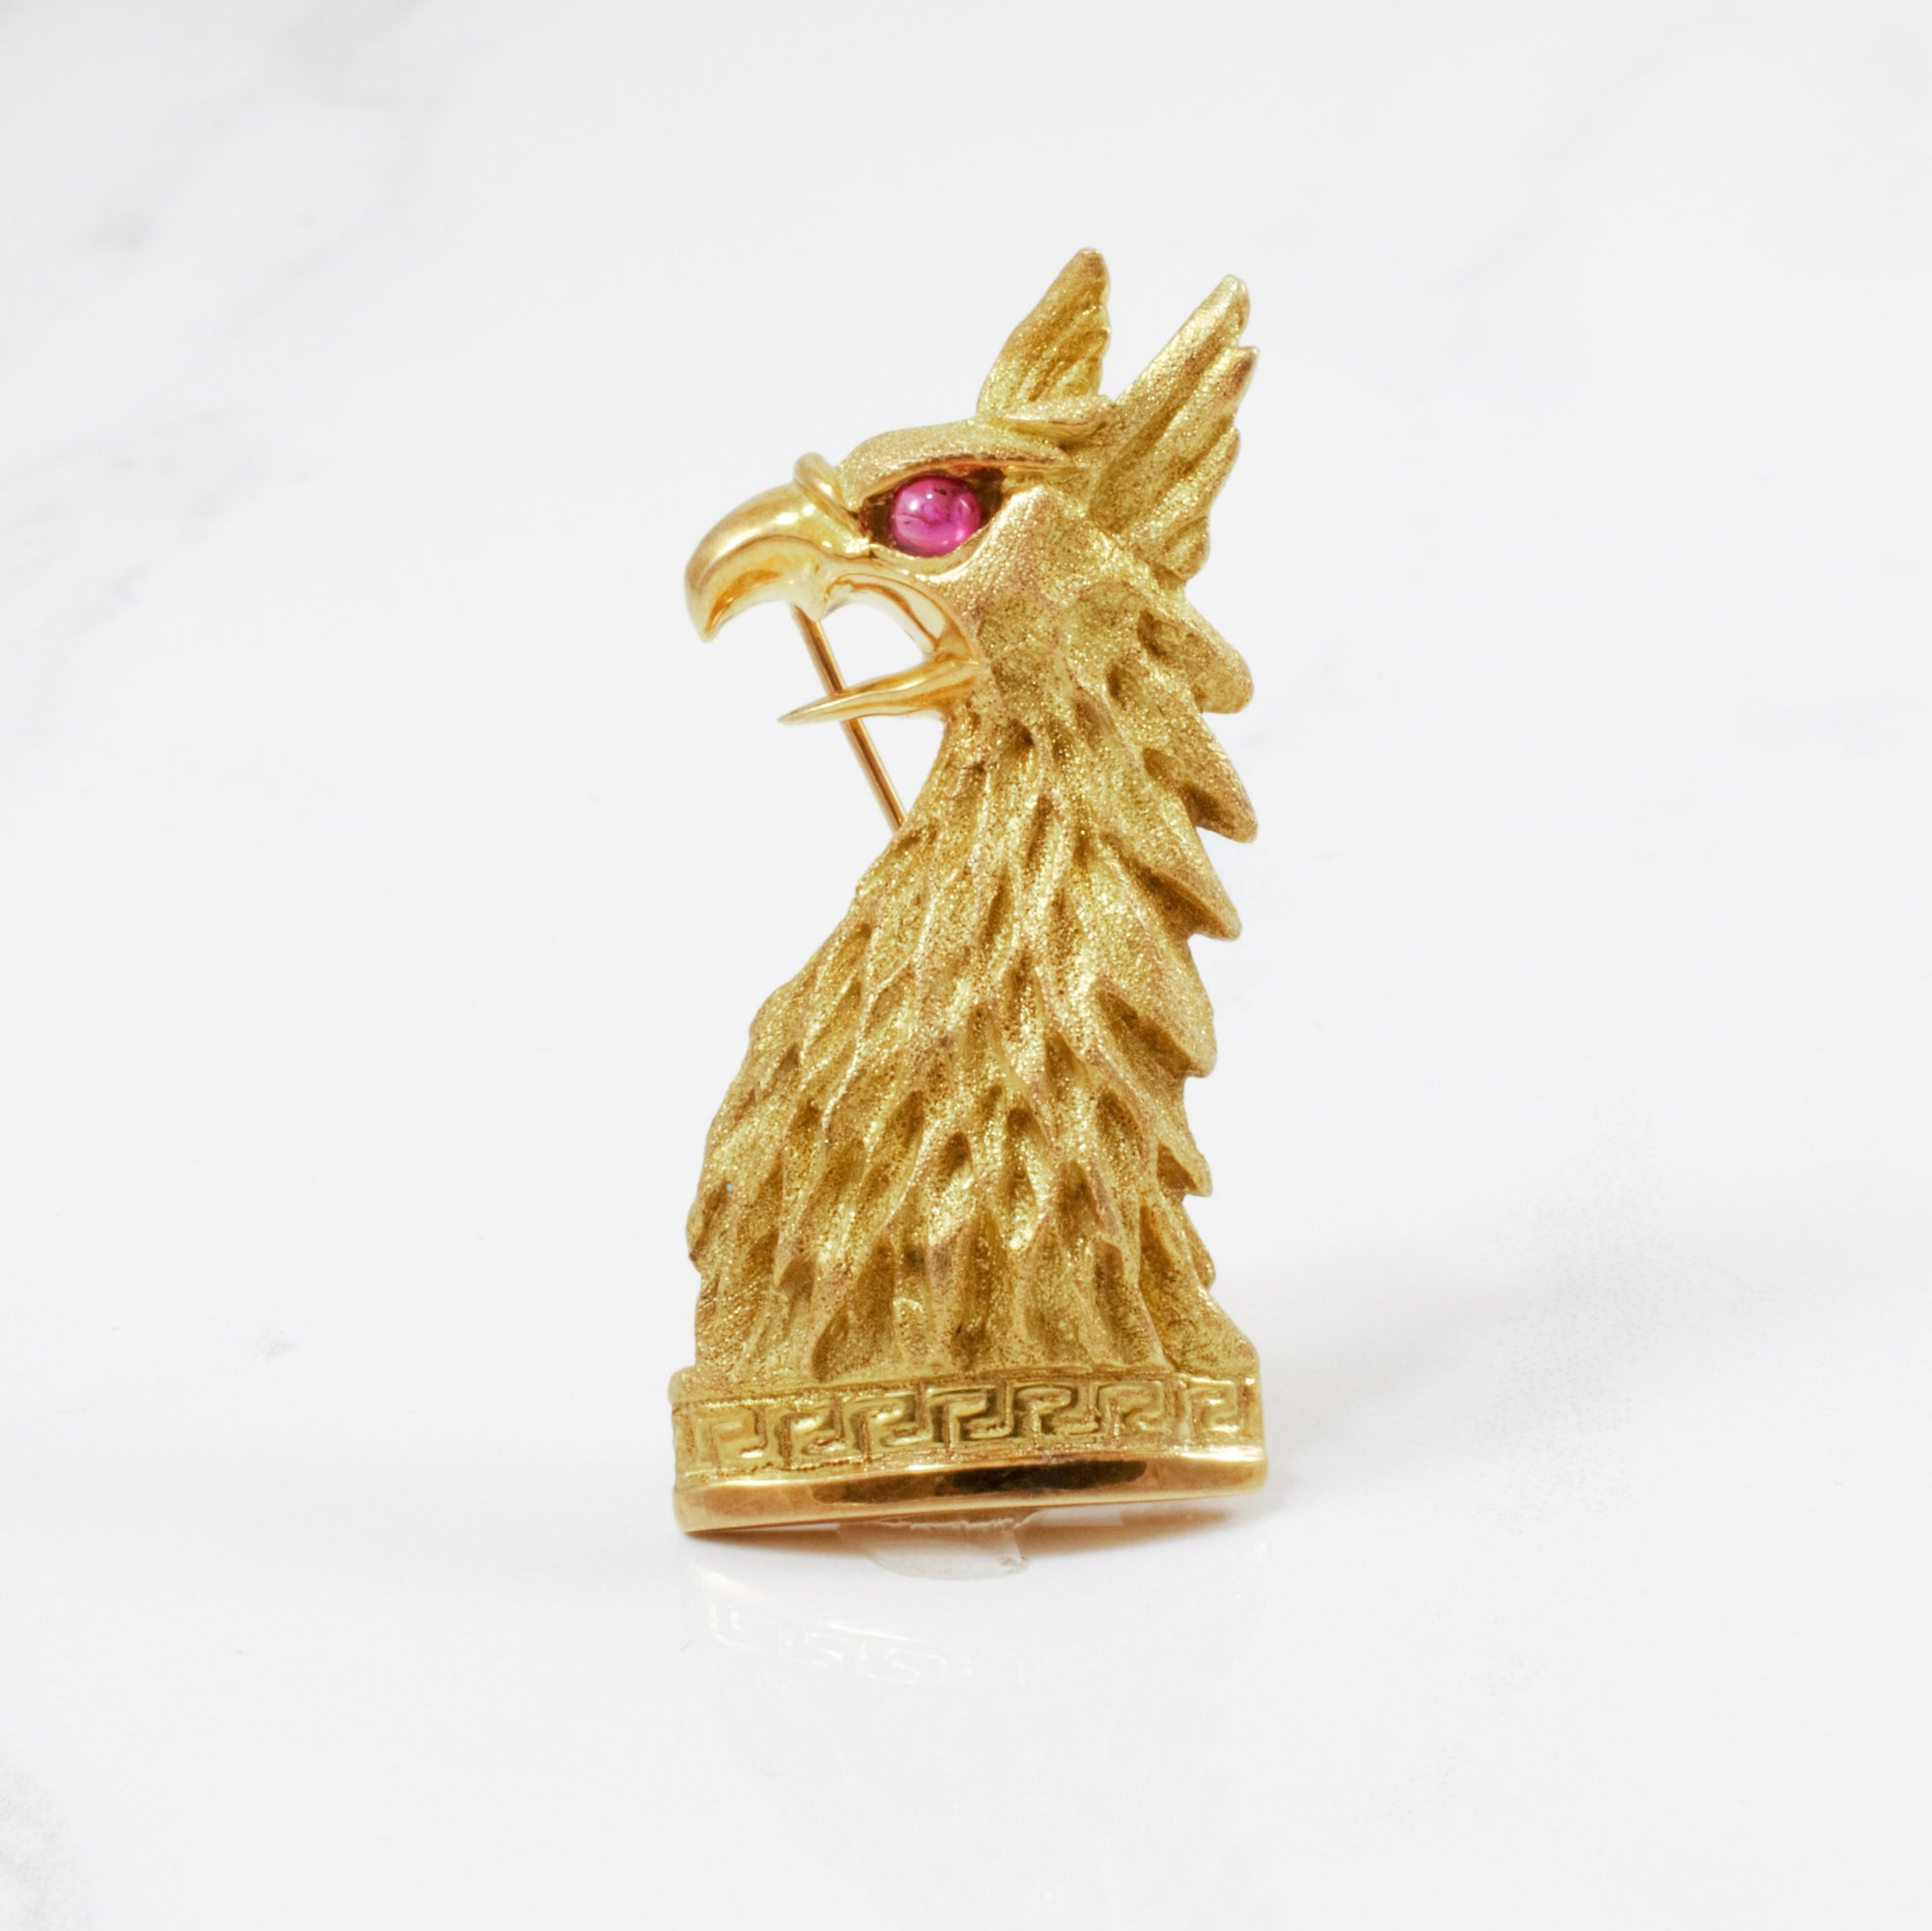 Vintage Luxury Jewelry Andreas von Zadora-Gerlof Ruby Griffon Brooch. Antique Gold Brooch With Ruby. Vintage Brooch. USA Antique & Vintage Jewelry Canada, International. 